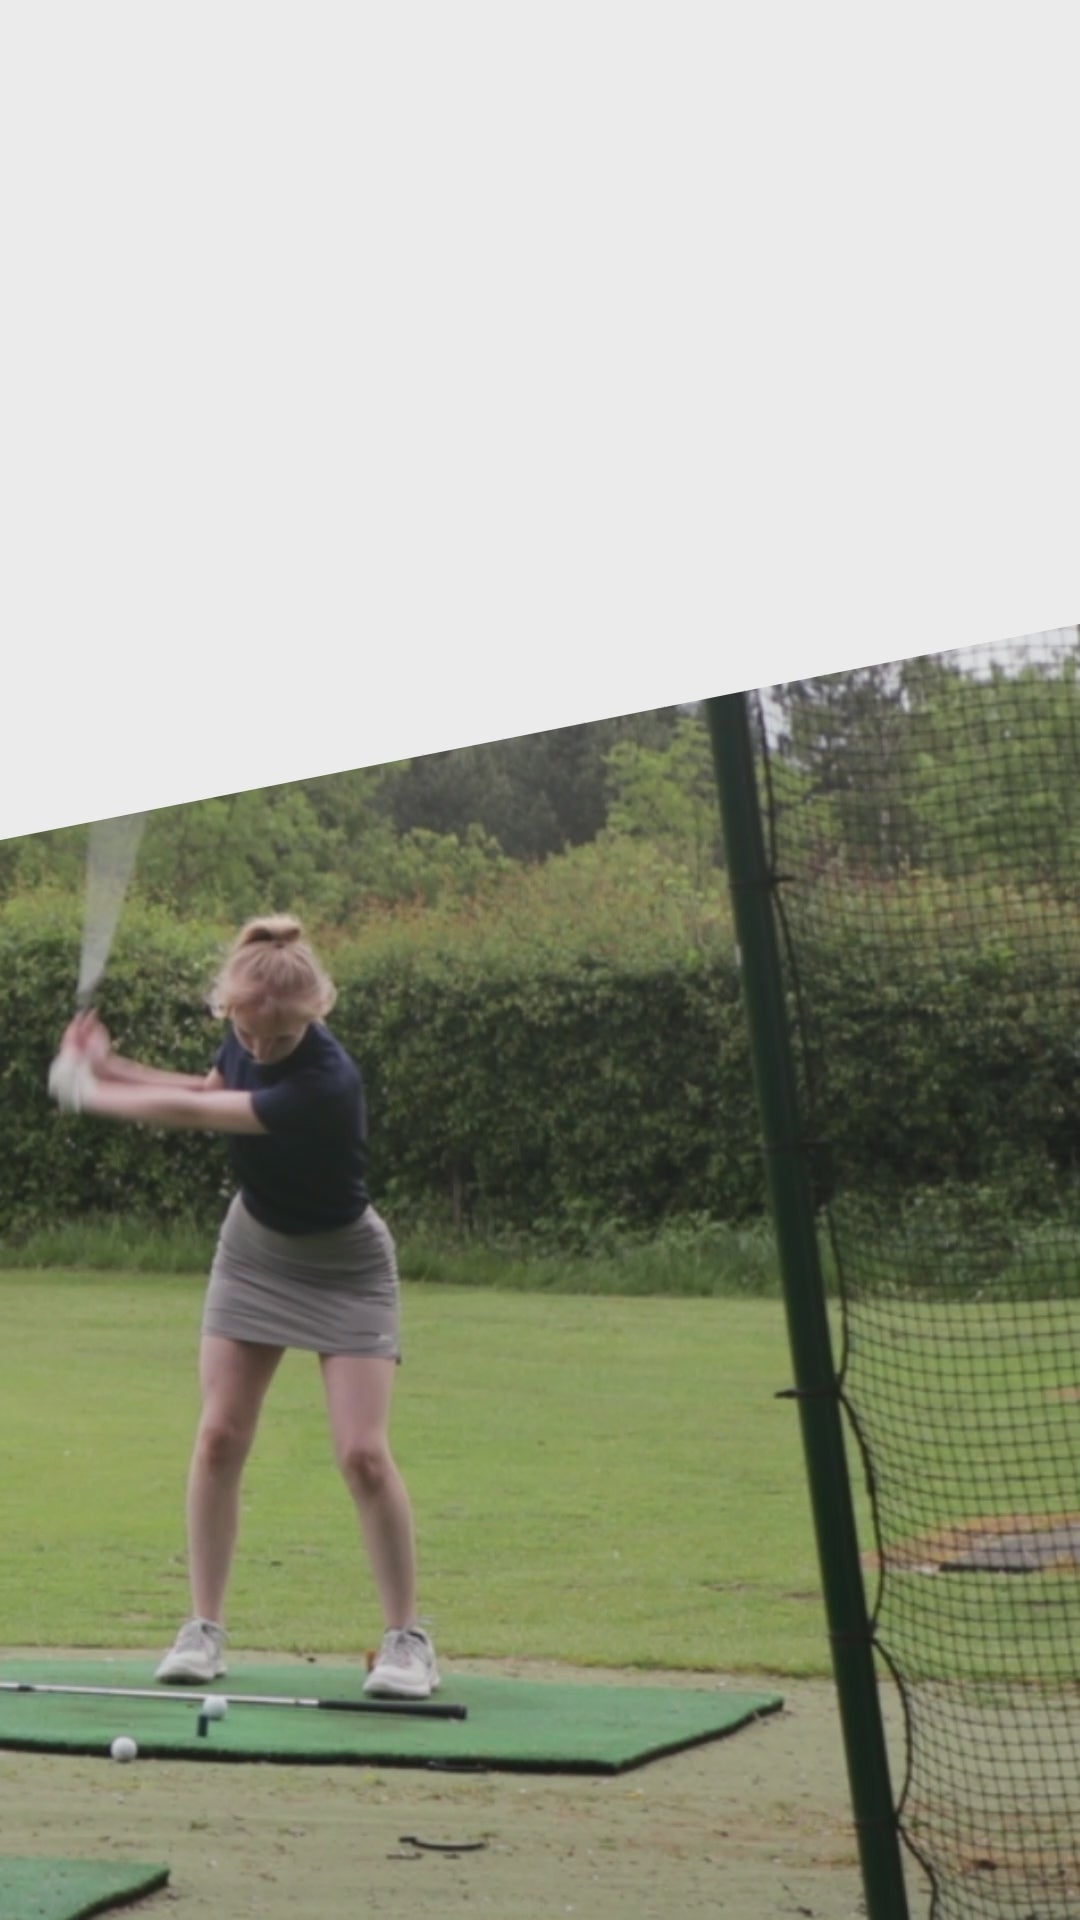 Golf Netting Material 10'x10' - Golf Hitting Net for Backyard